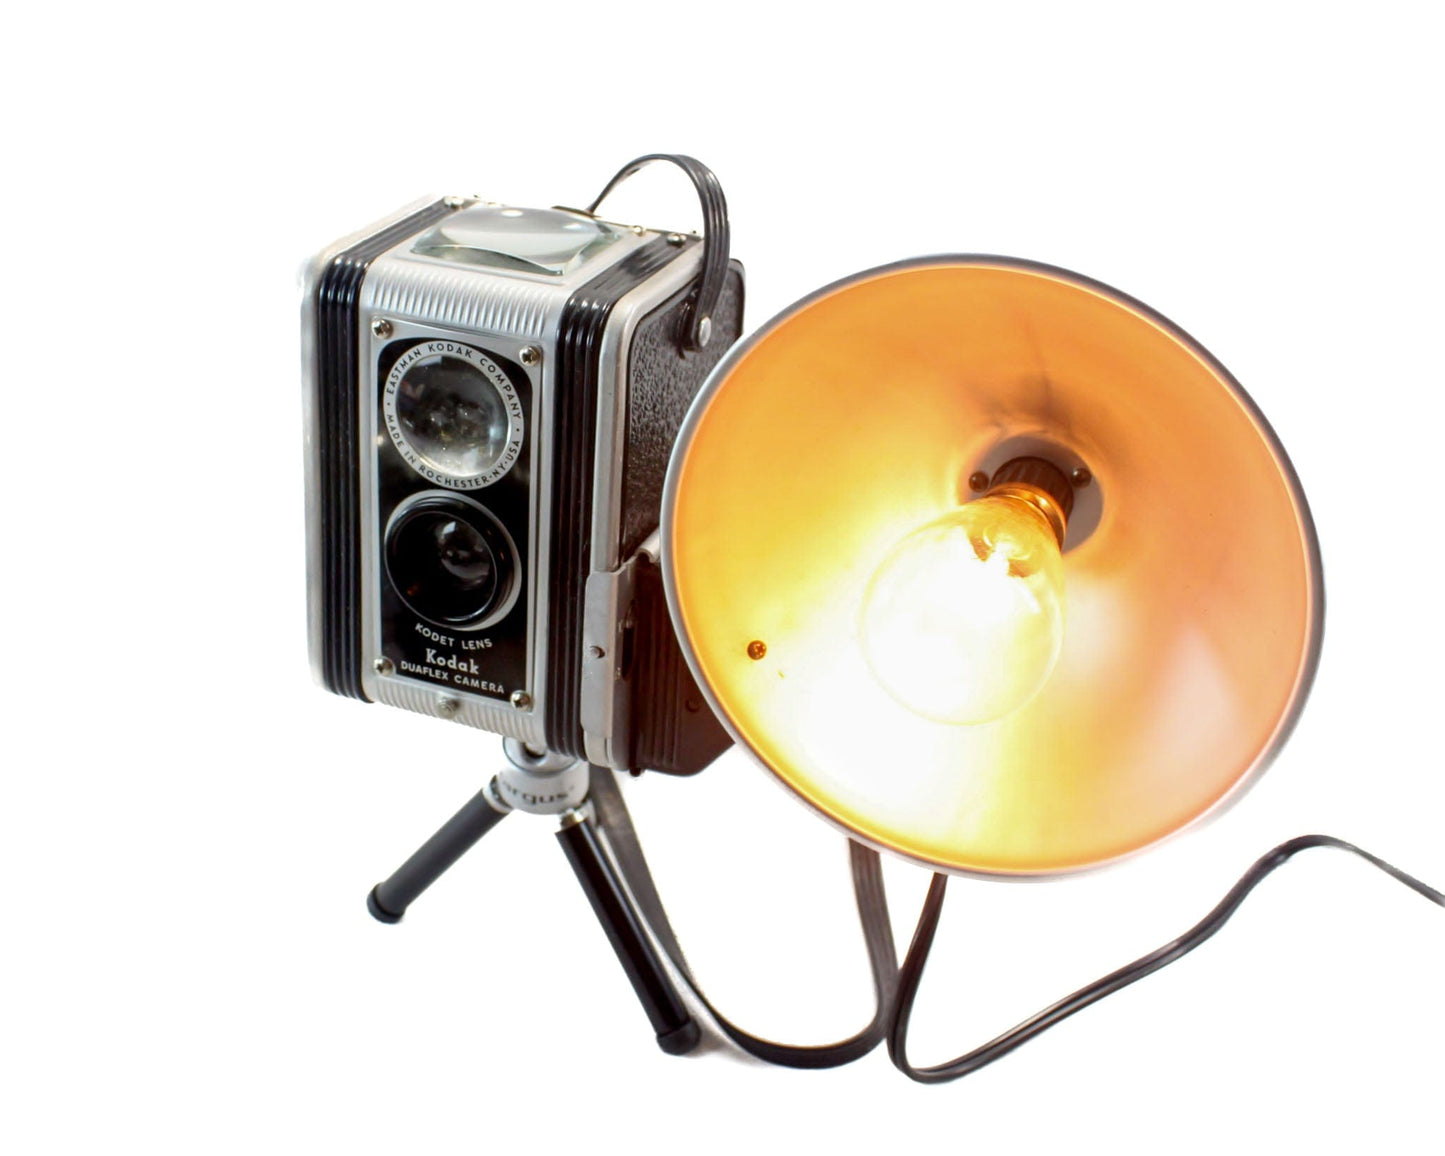 LightAndTimeArt Camera Lamp LED Desk Lamp - Black Kodak Duaflex Vintage Camera on mini tripod, Photographer and Vintage Lover gift